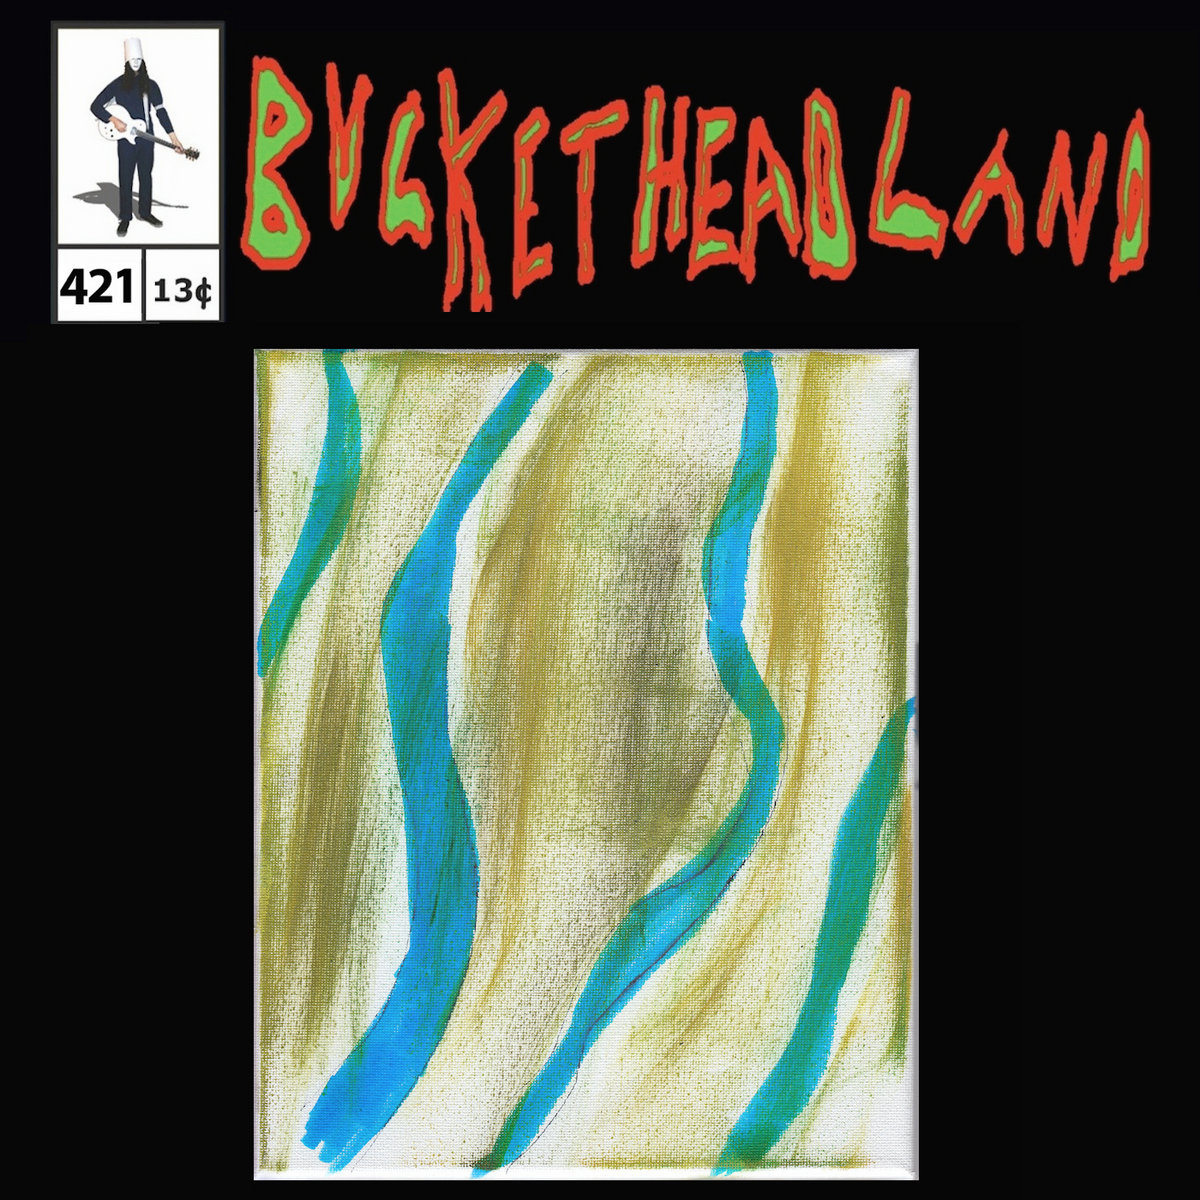 BUCKETHEAD - Pike 421 - Streams cover 